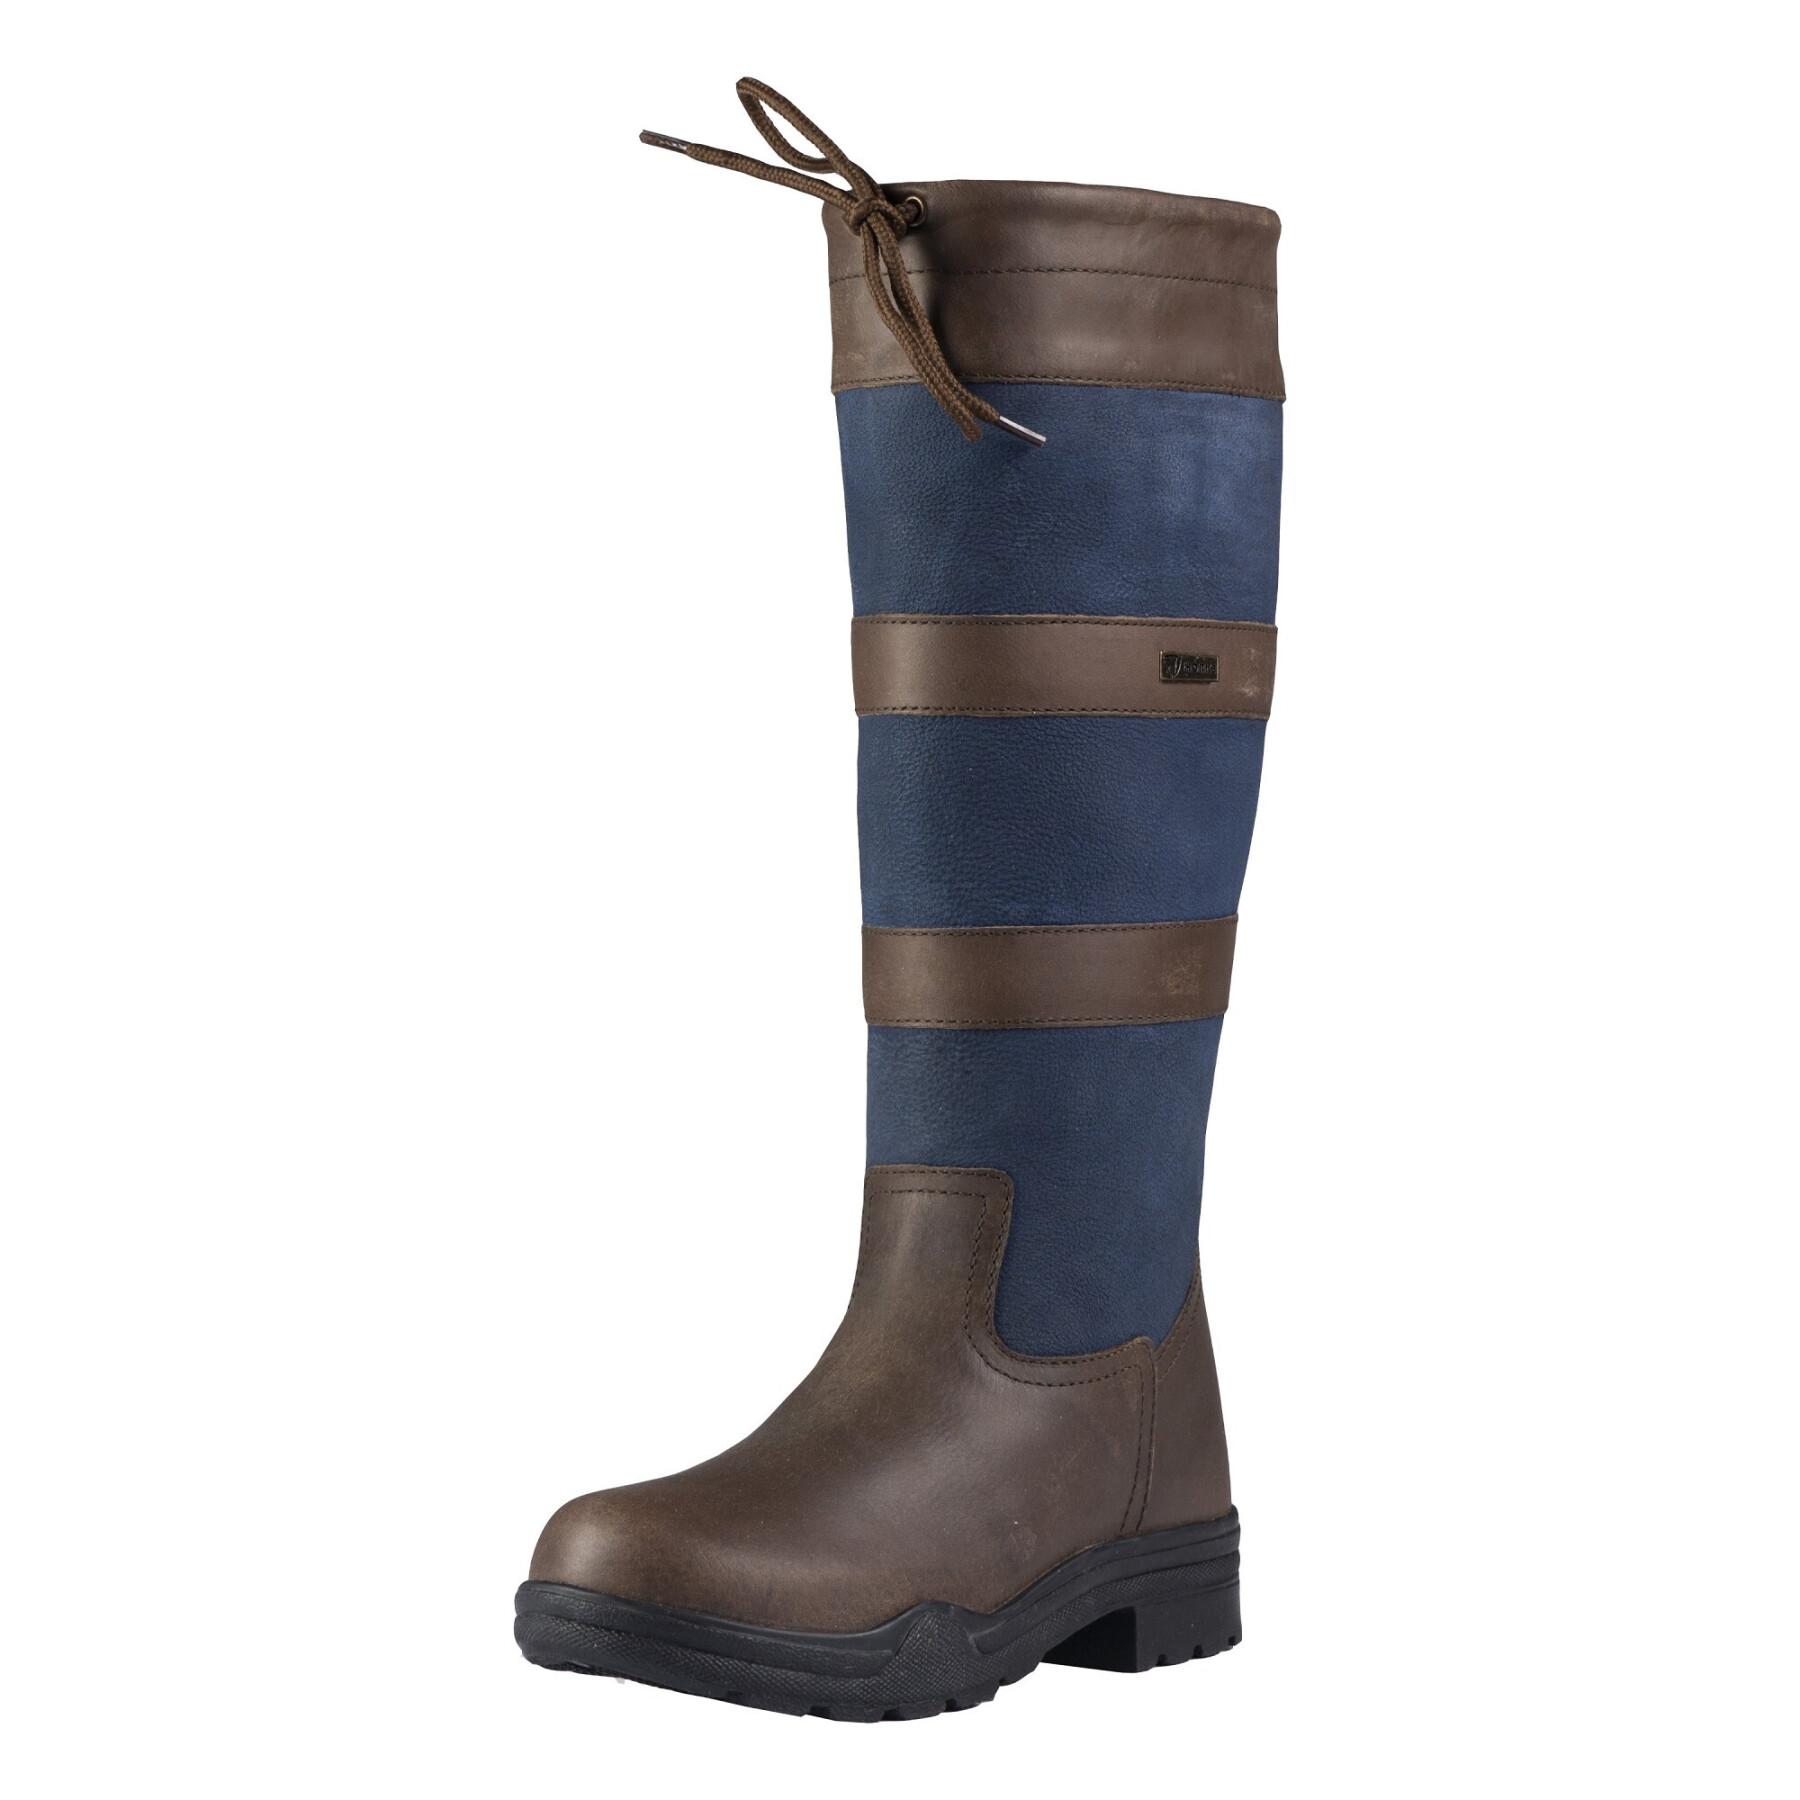 Waterproof boots Horka Milton